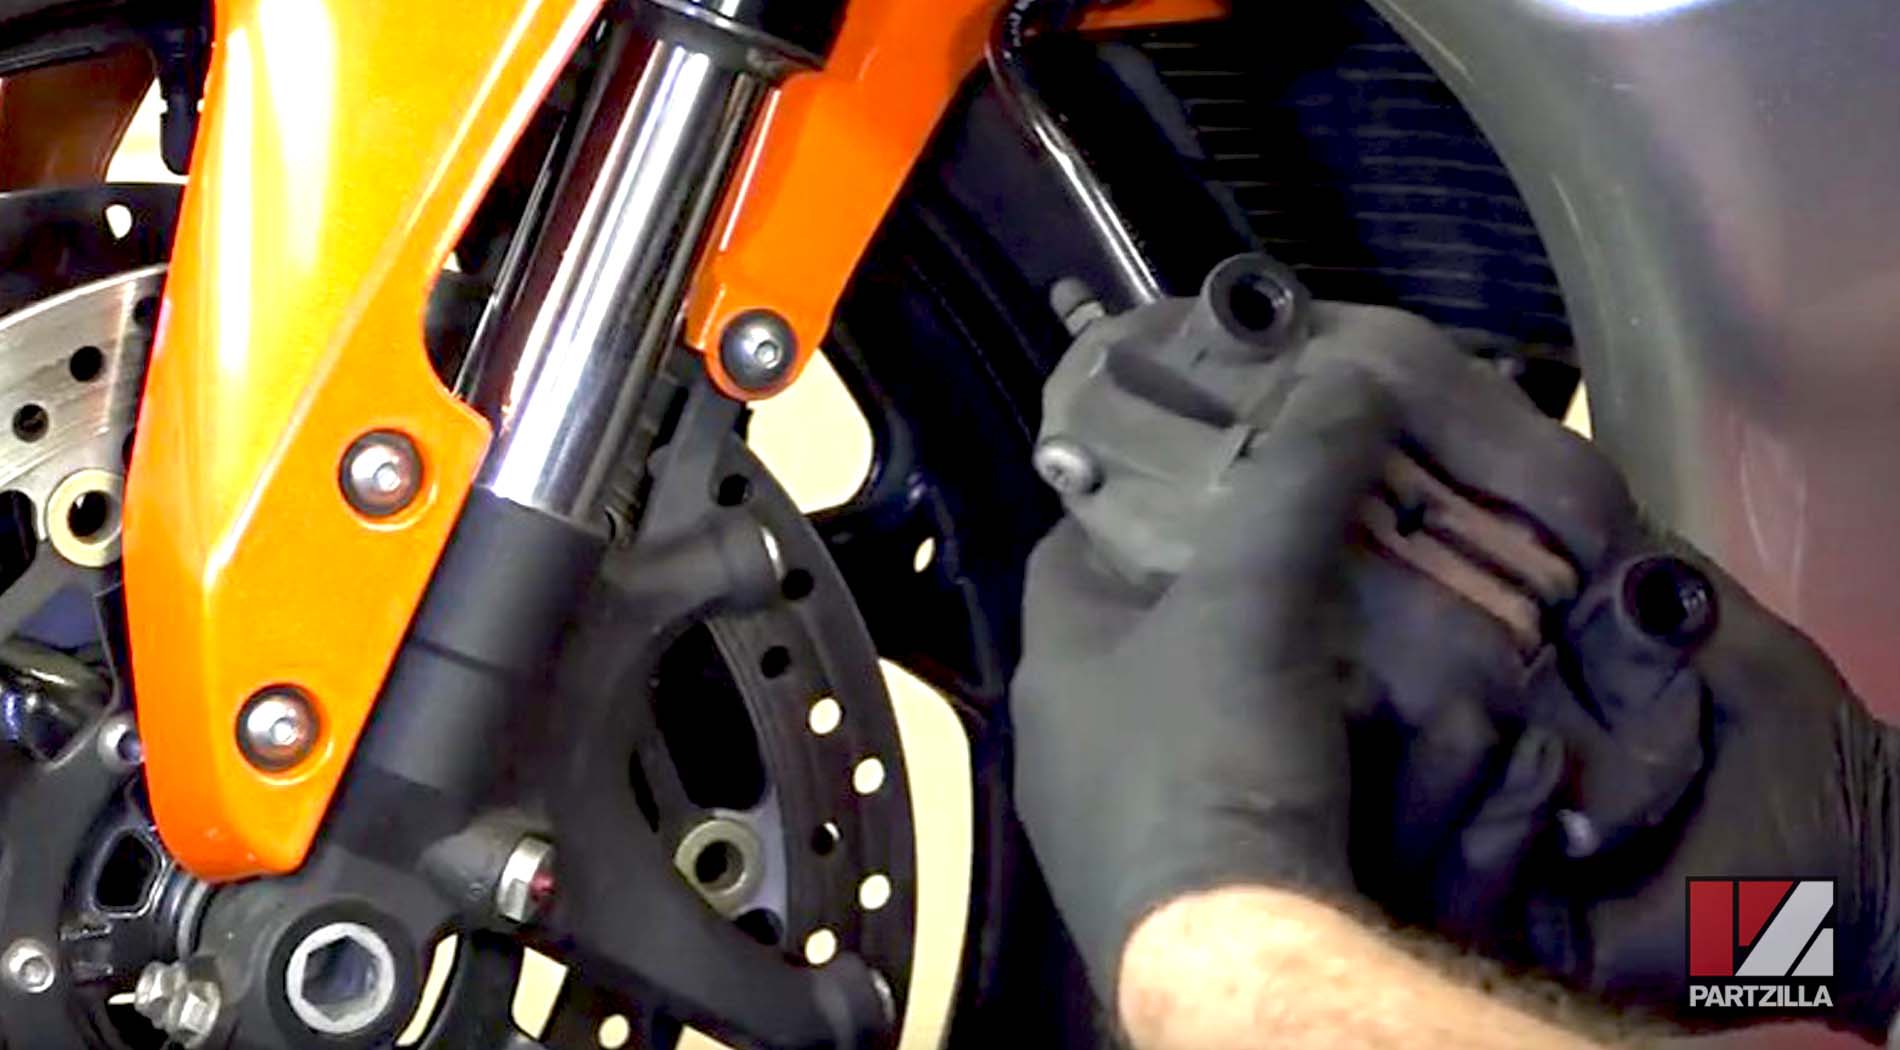 Honda CBR600 motorcycle front brakes